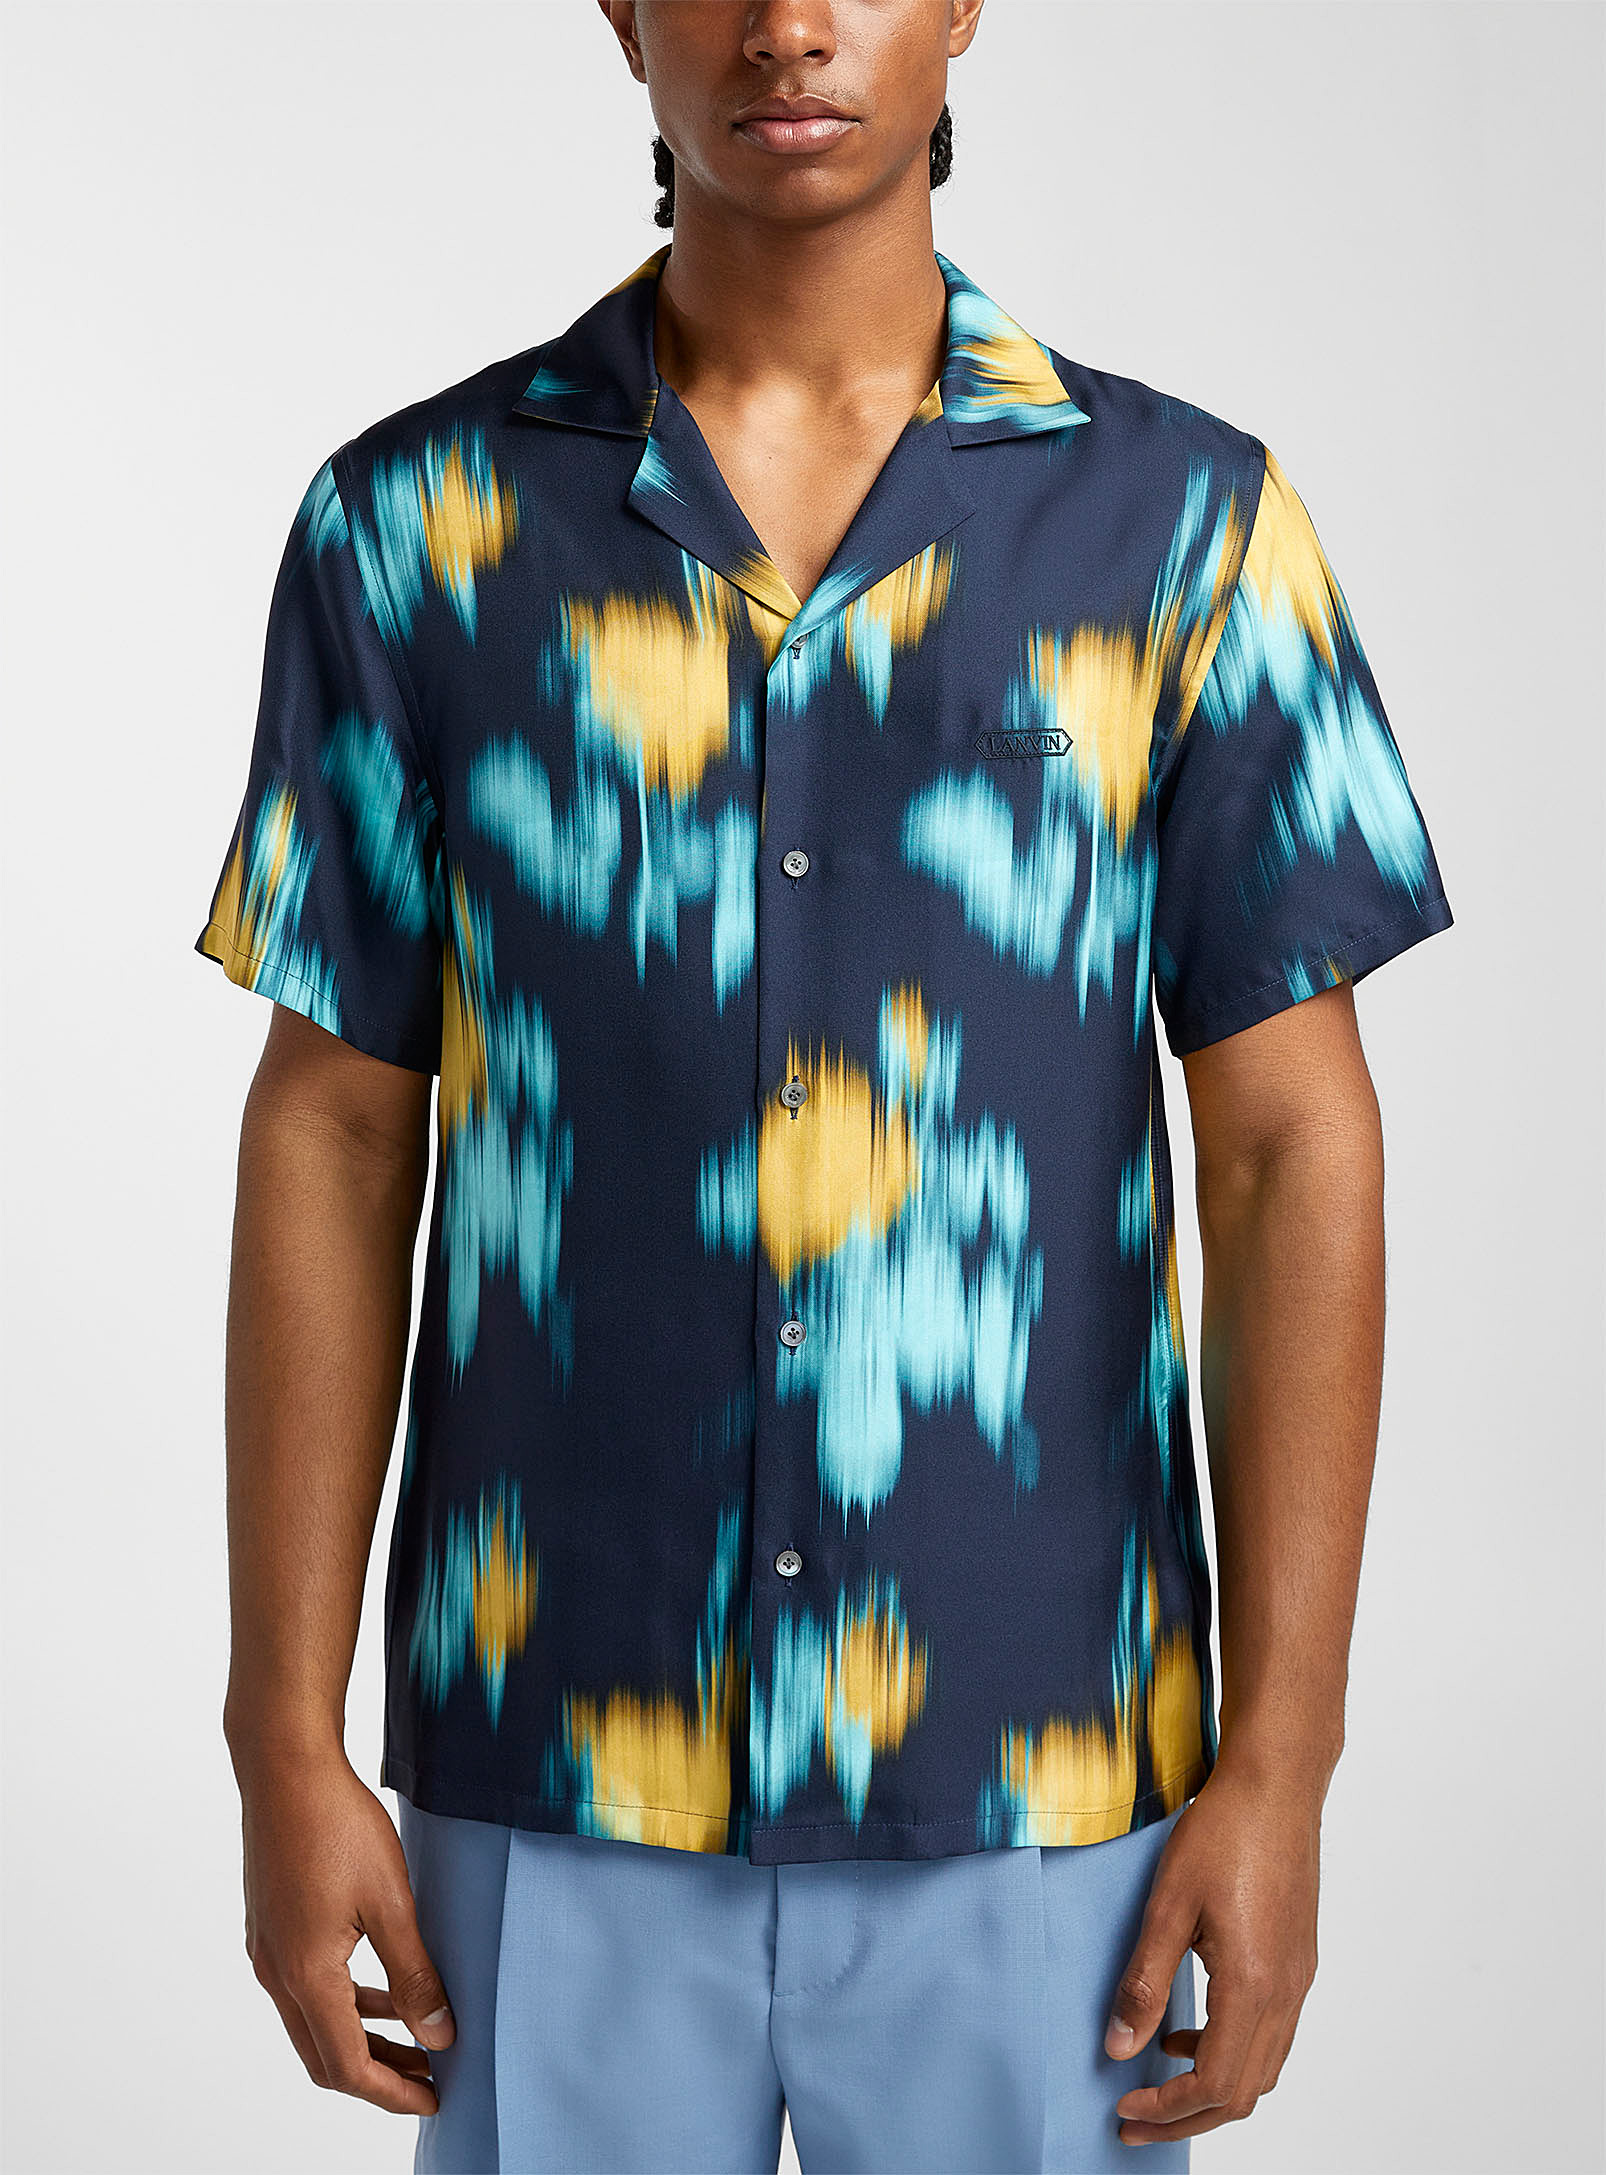 Lanvin - Men's Blurred flowers silky shirt